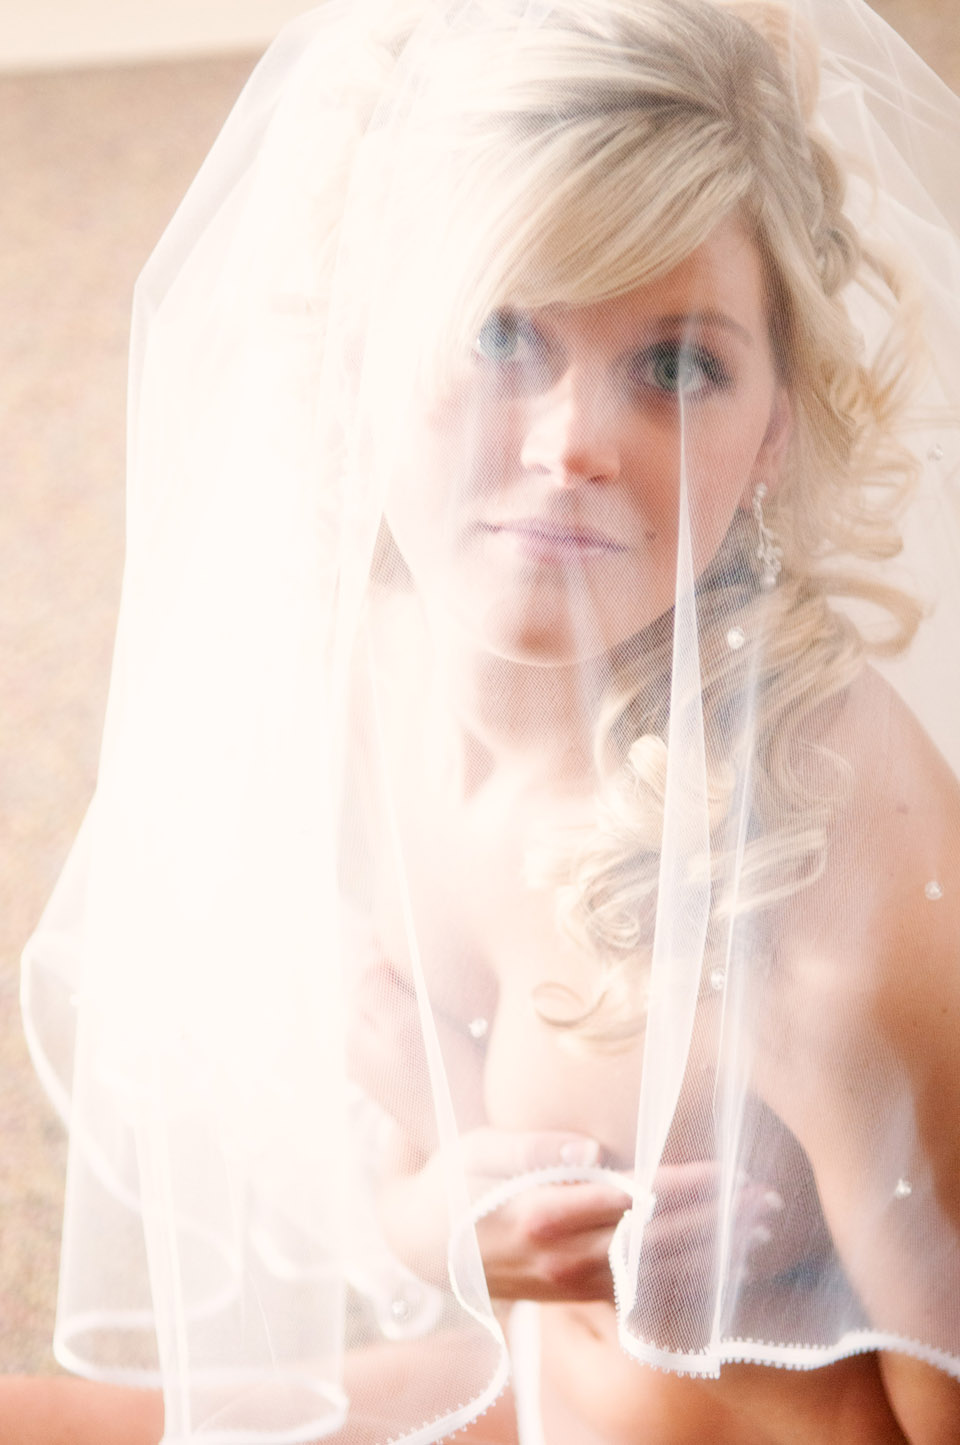 northern michigan wedding photographers, engagements, portraits, bride